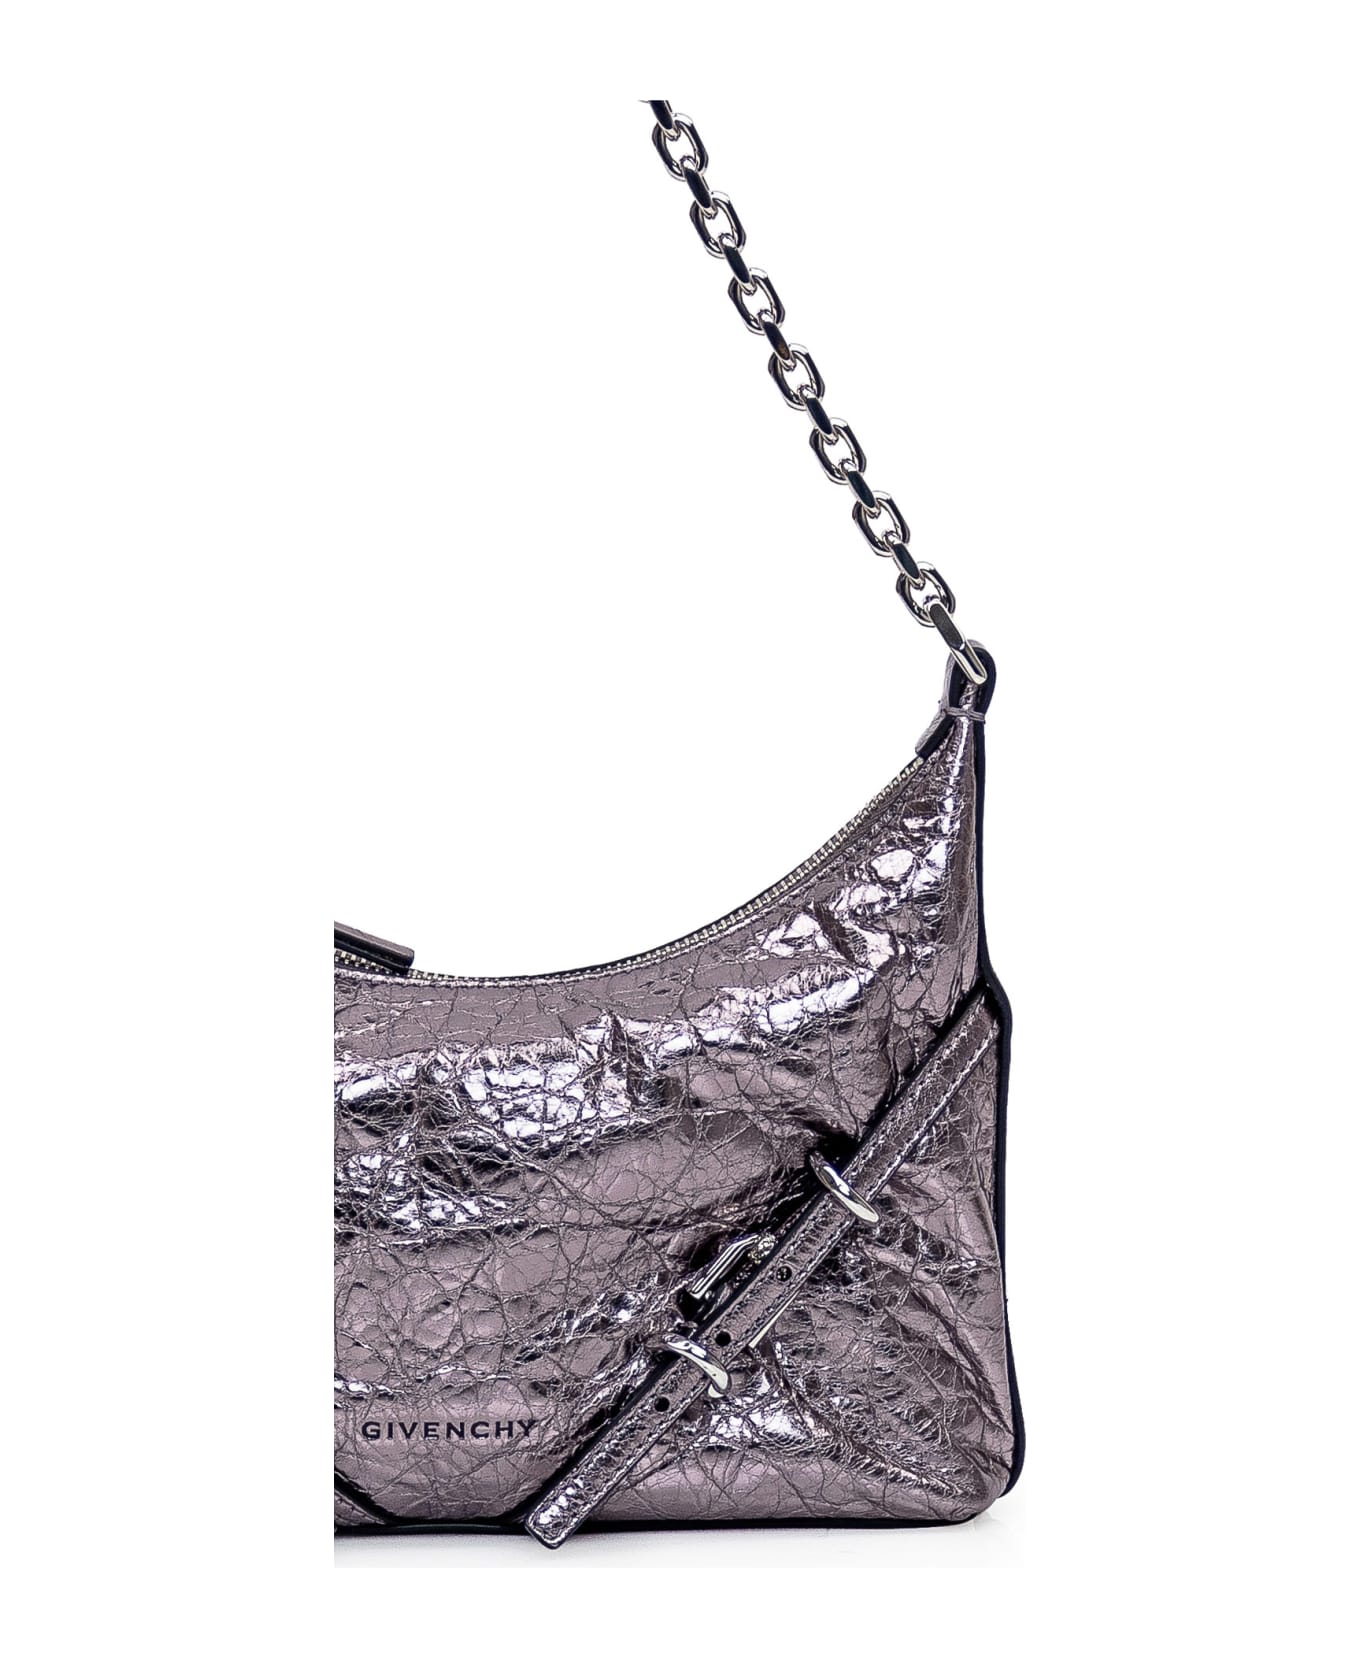 Givenchy Voyou Party Shoulder Bag - SILVER GREY